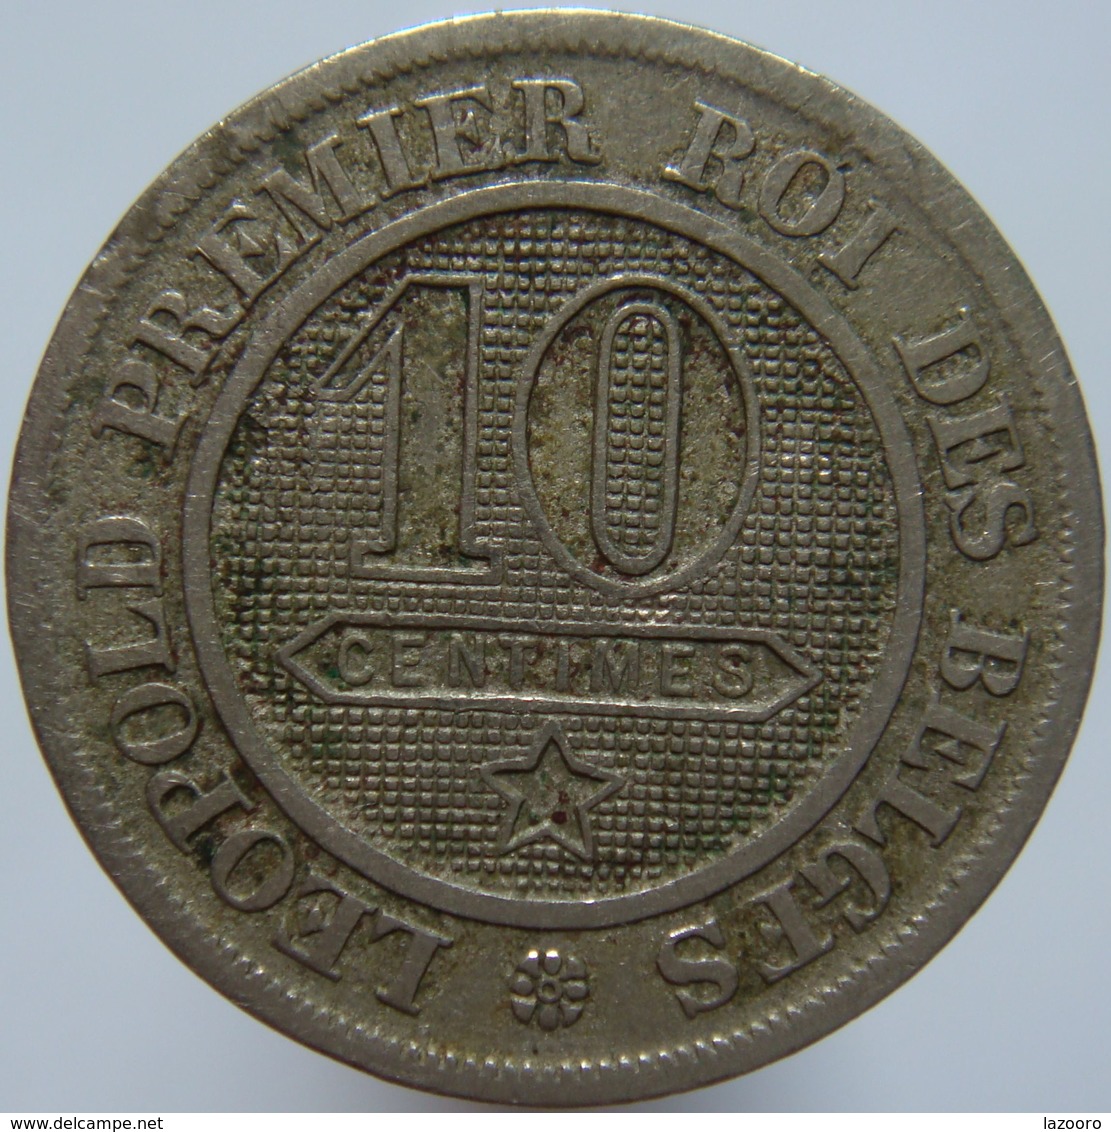 LaZooRo: Belgium 10 Centimes 1862 VF - 10 Cents